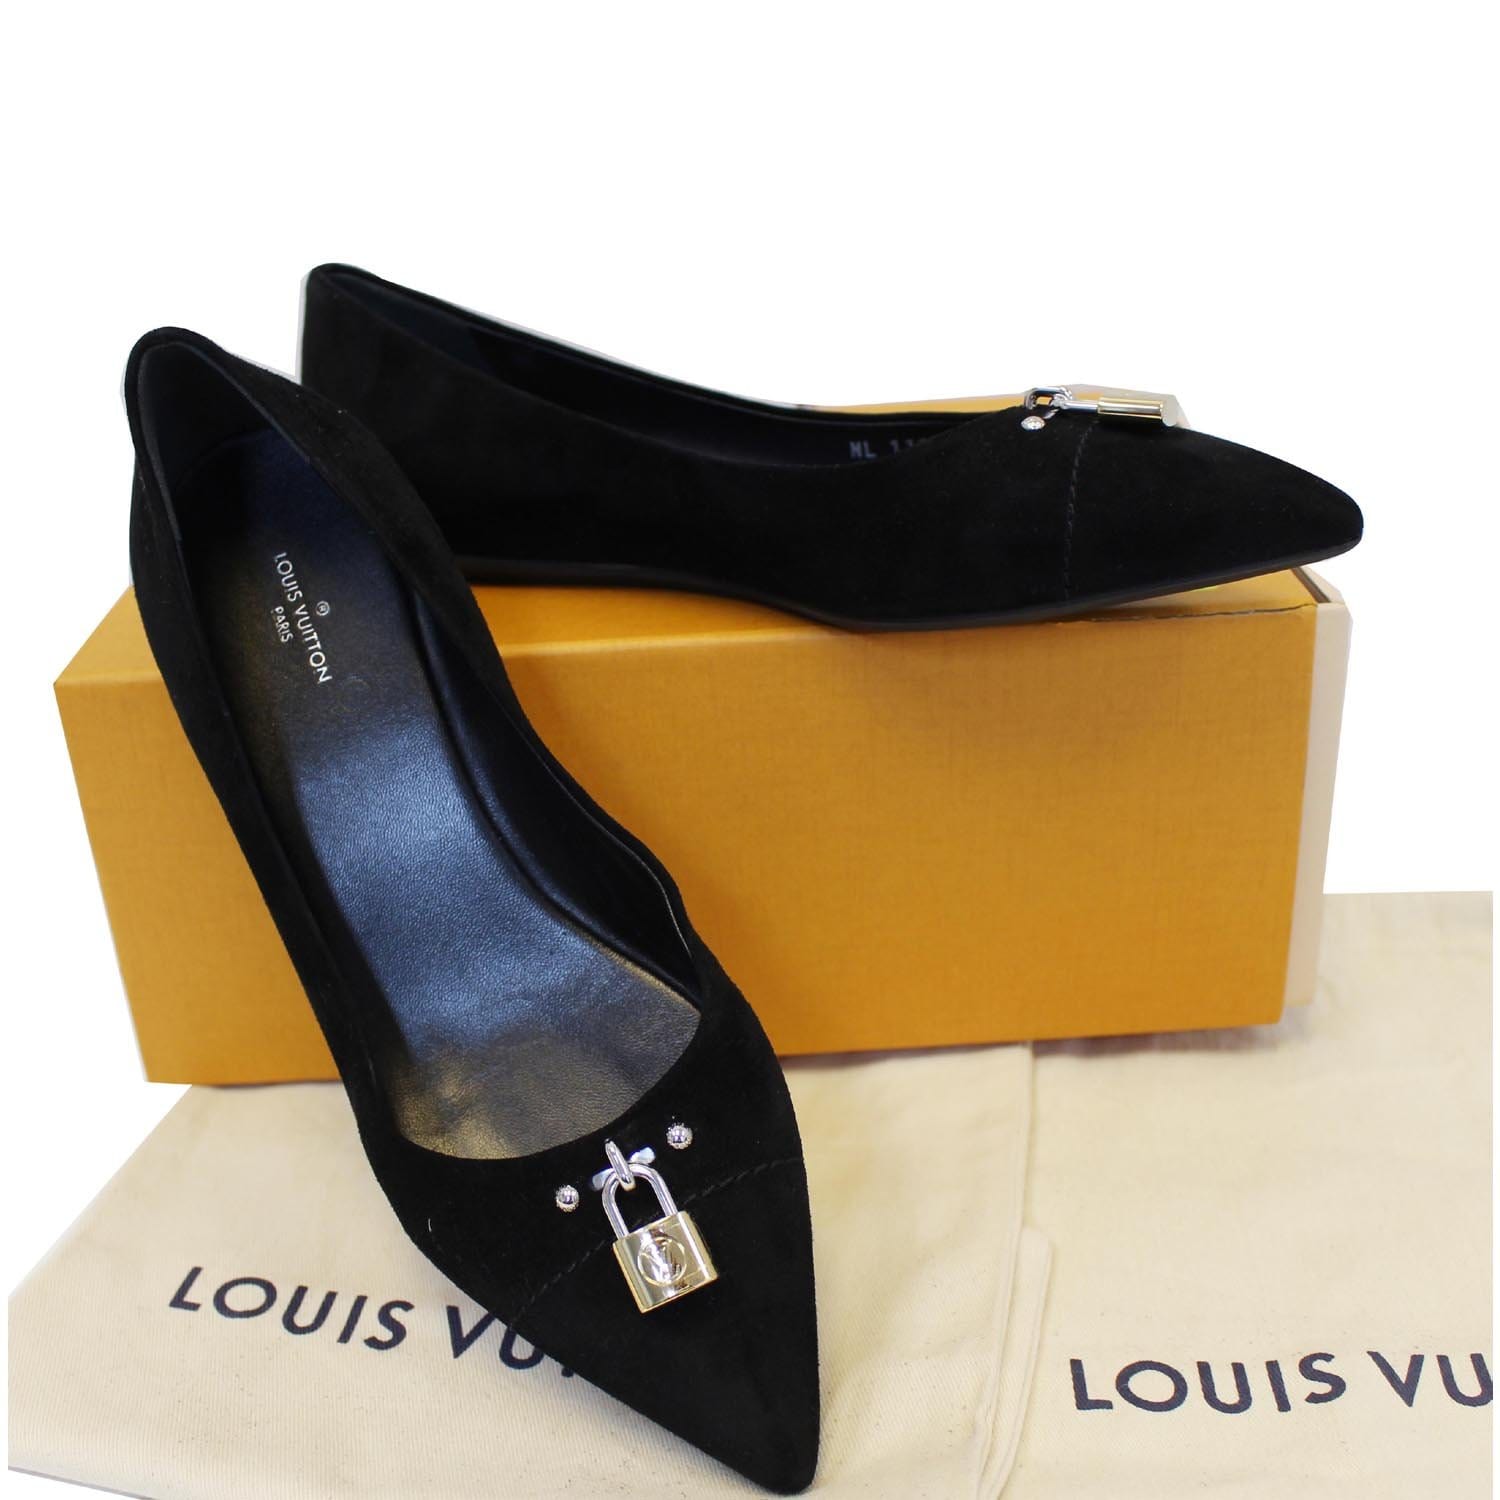 Louis Vuitton Slip On Flats for Women